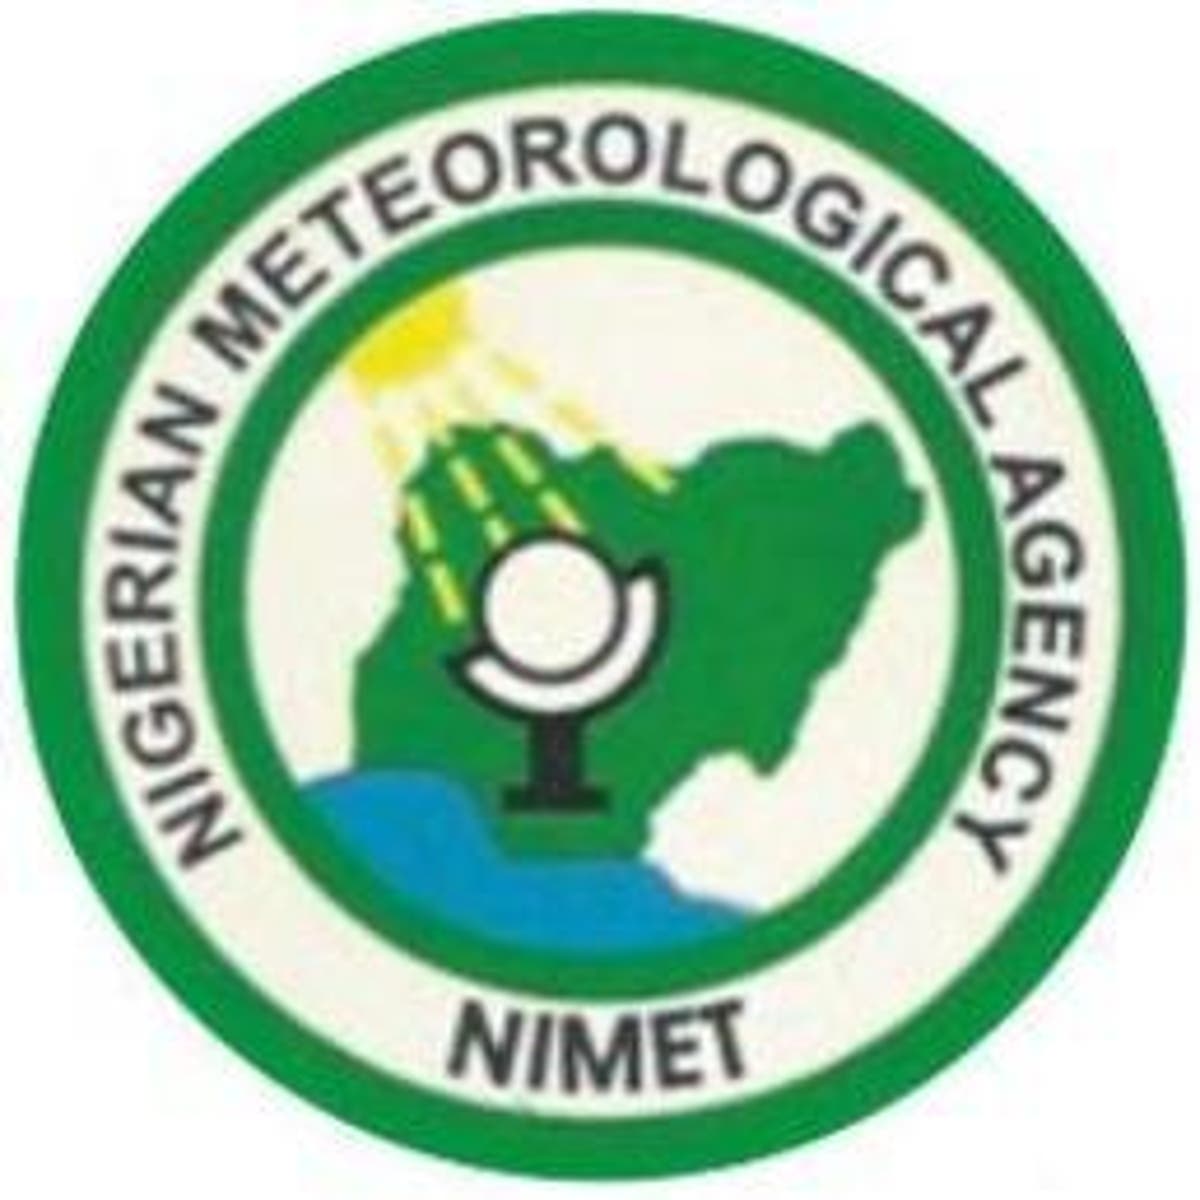 FG empowers NIMET institute to commence academic activities - Tribune Online